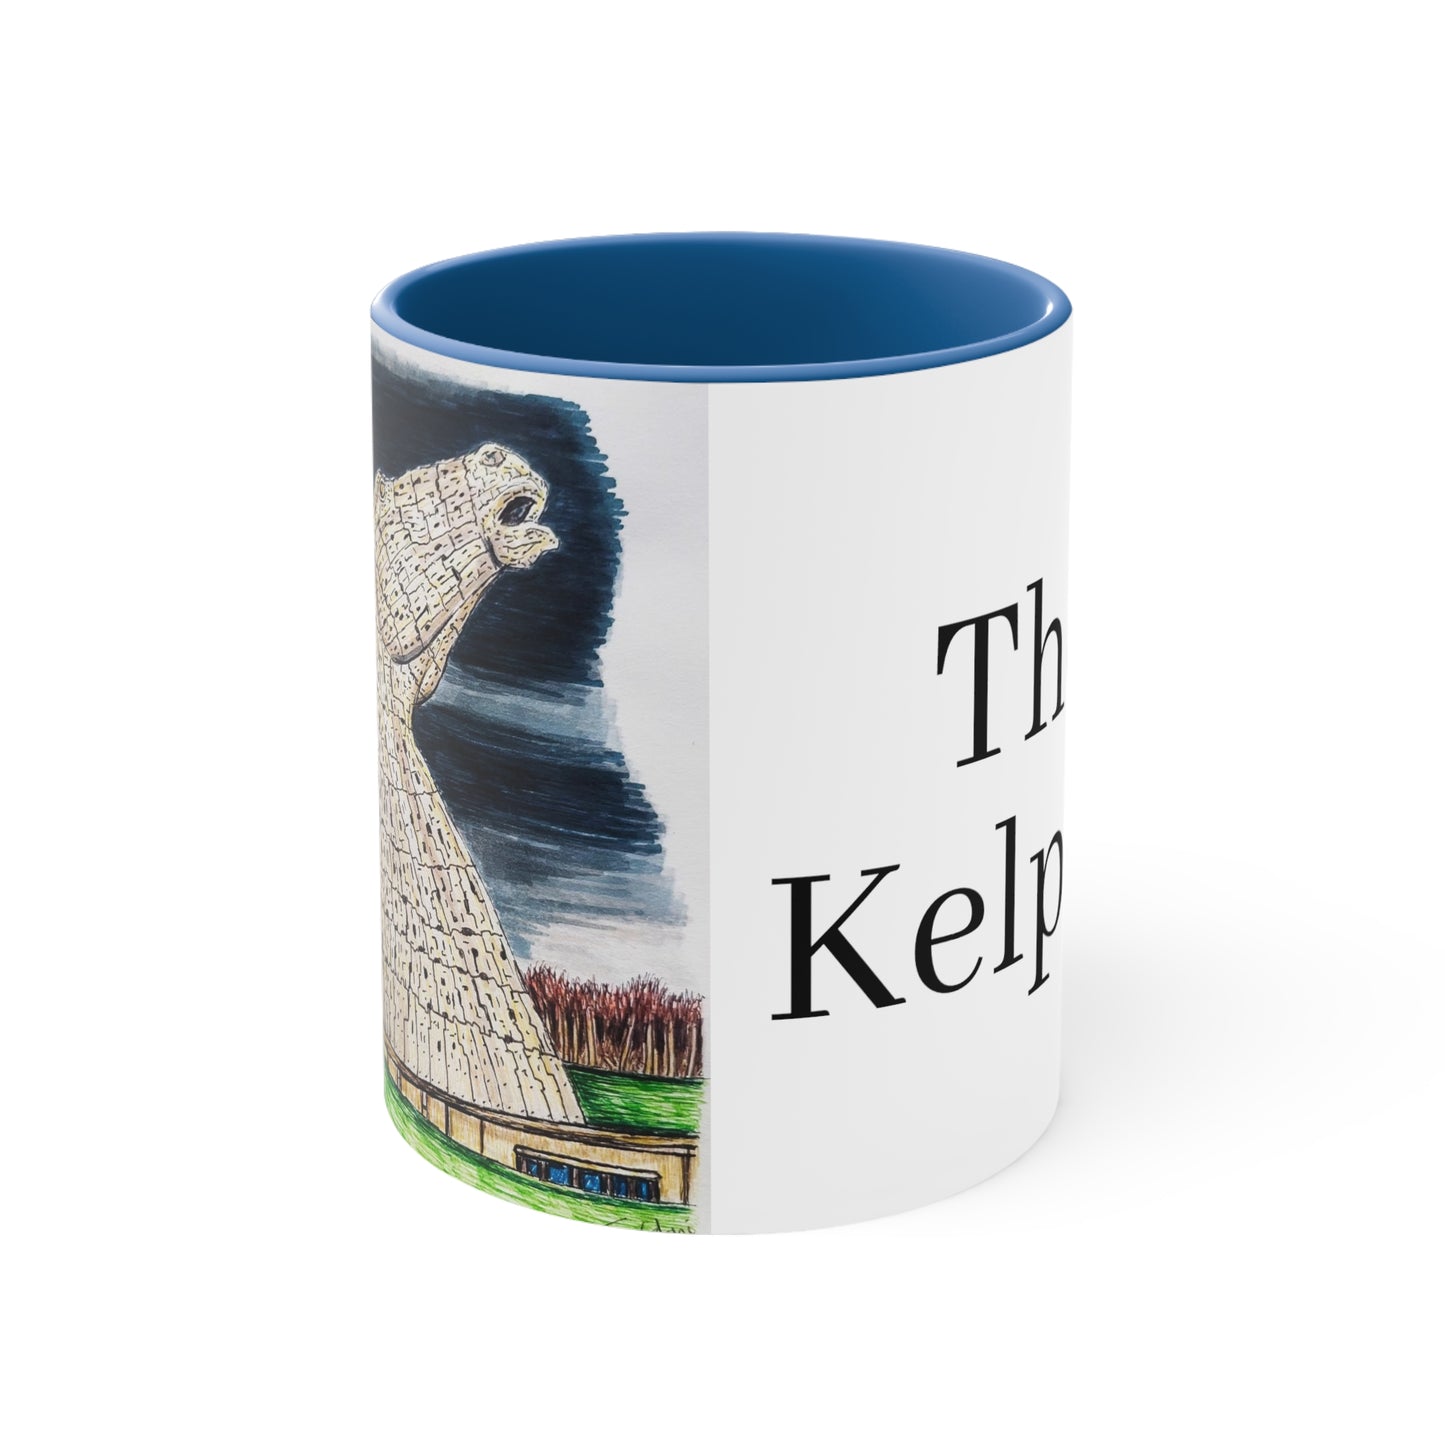 Coffee Mug, 11oz- The Kelpies Scotland Design